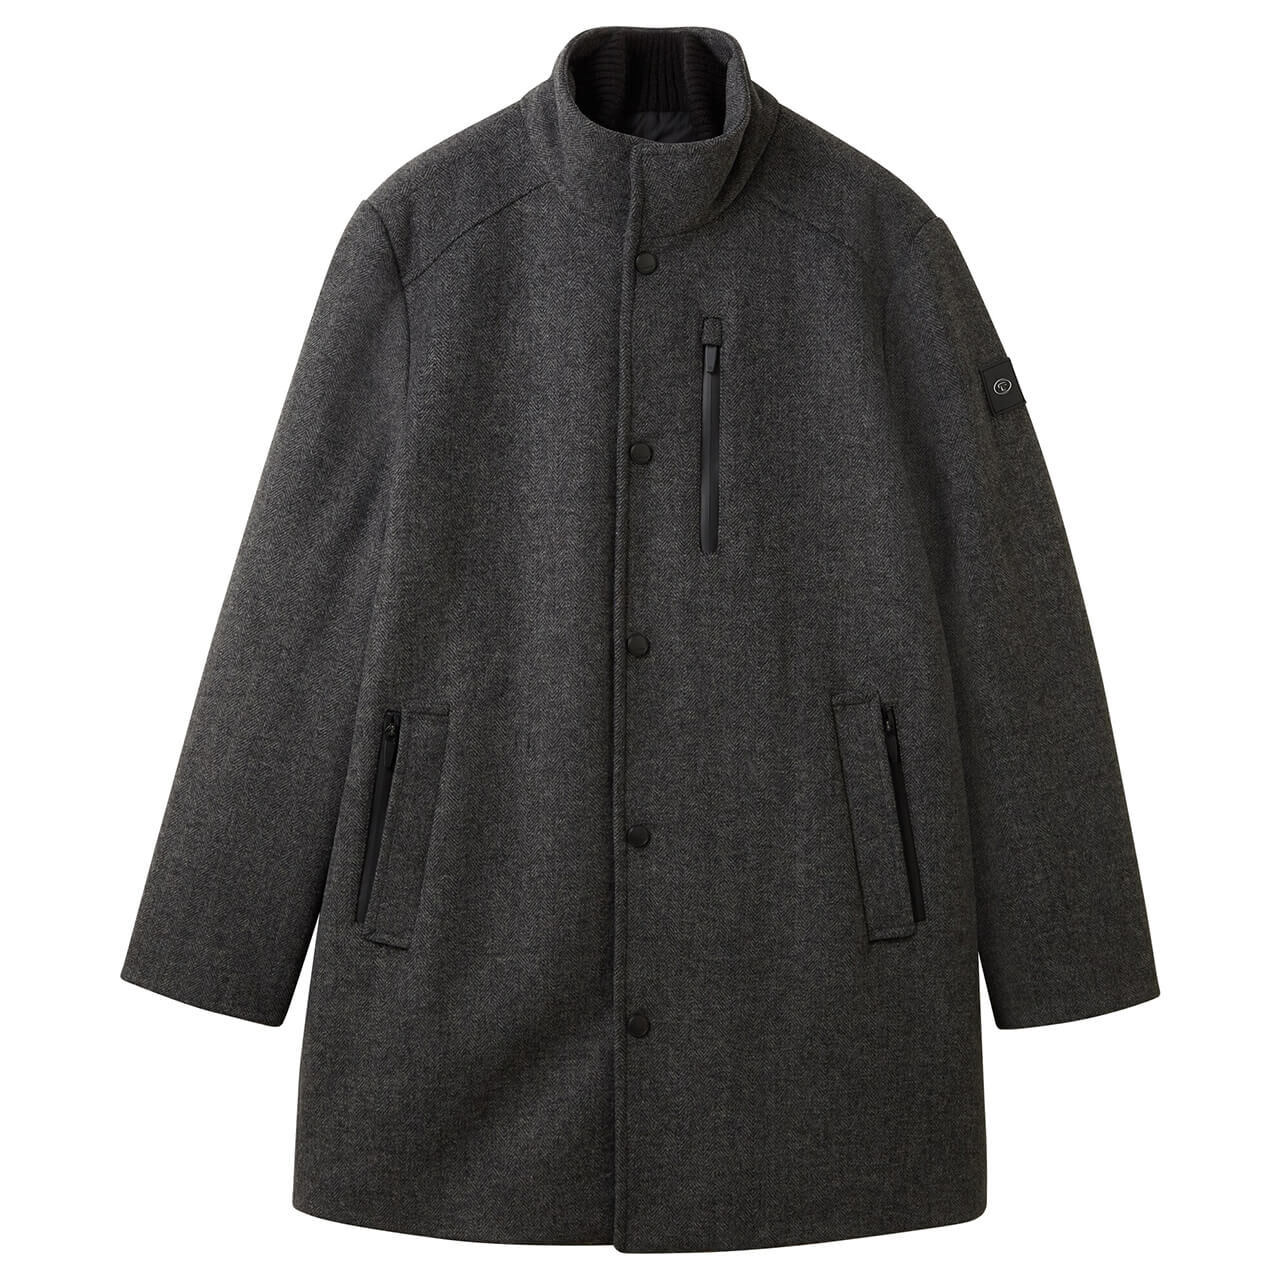 Tom Tailor Herren Mantel Wool Coat 2 in 1 dark grey black herringbone